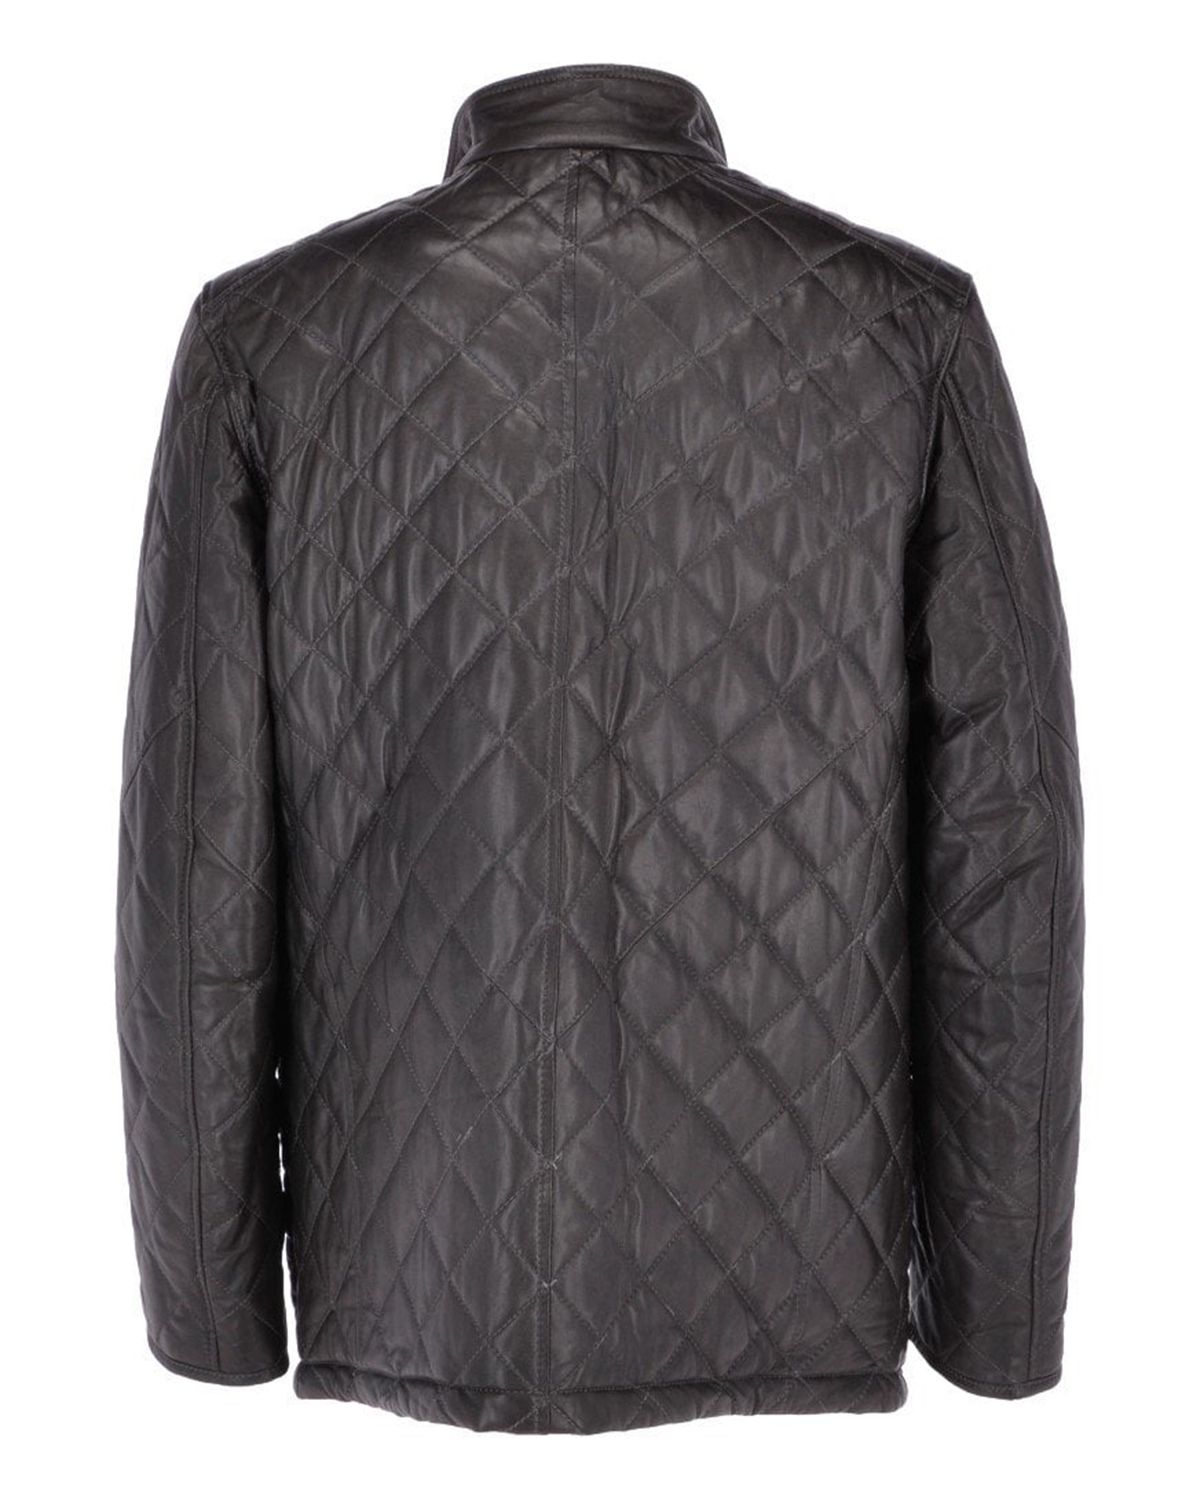 Black Diamond Quilted Leather Jacket | Elite Jacket